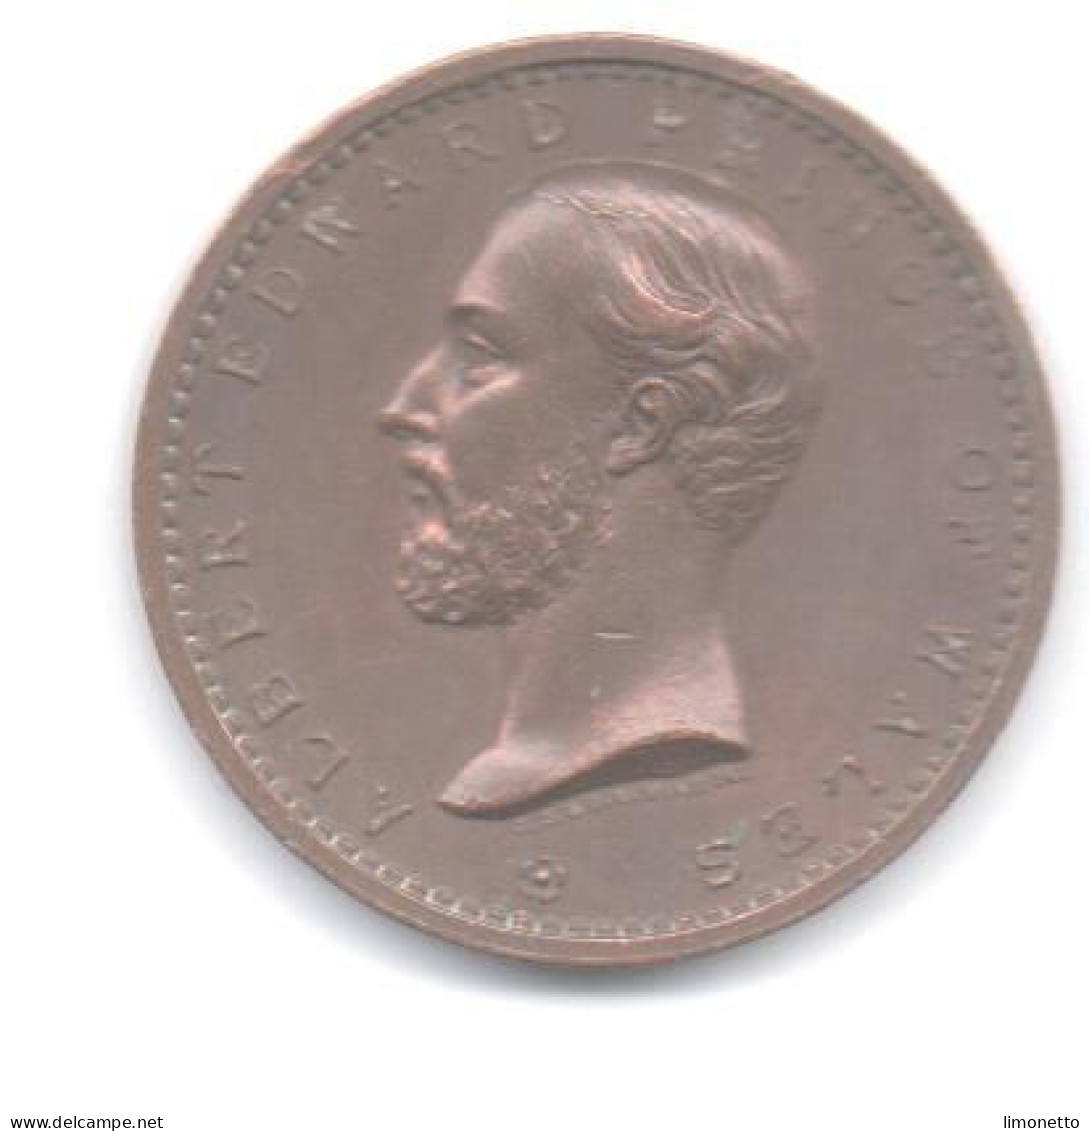 Médaille- Royaume-Uni- 1872 - National Thanksgiving -Albert Edward Prince Of Wales - Bronze  Sup - Monarchia/ Nobiltà